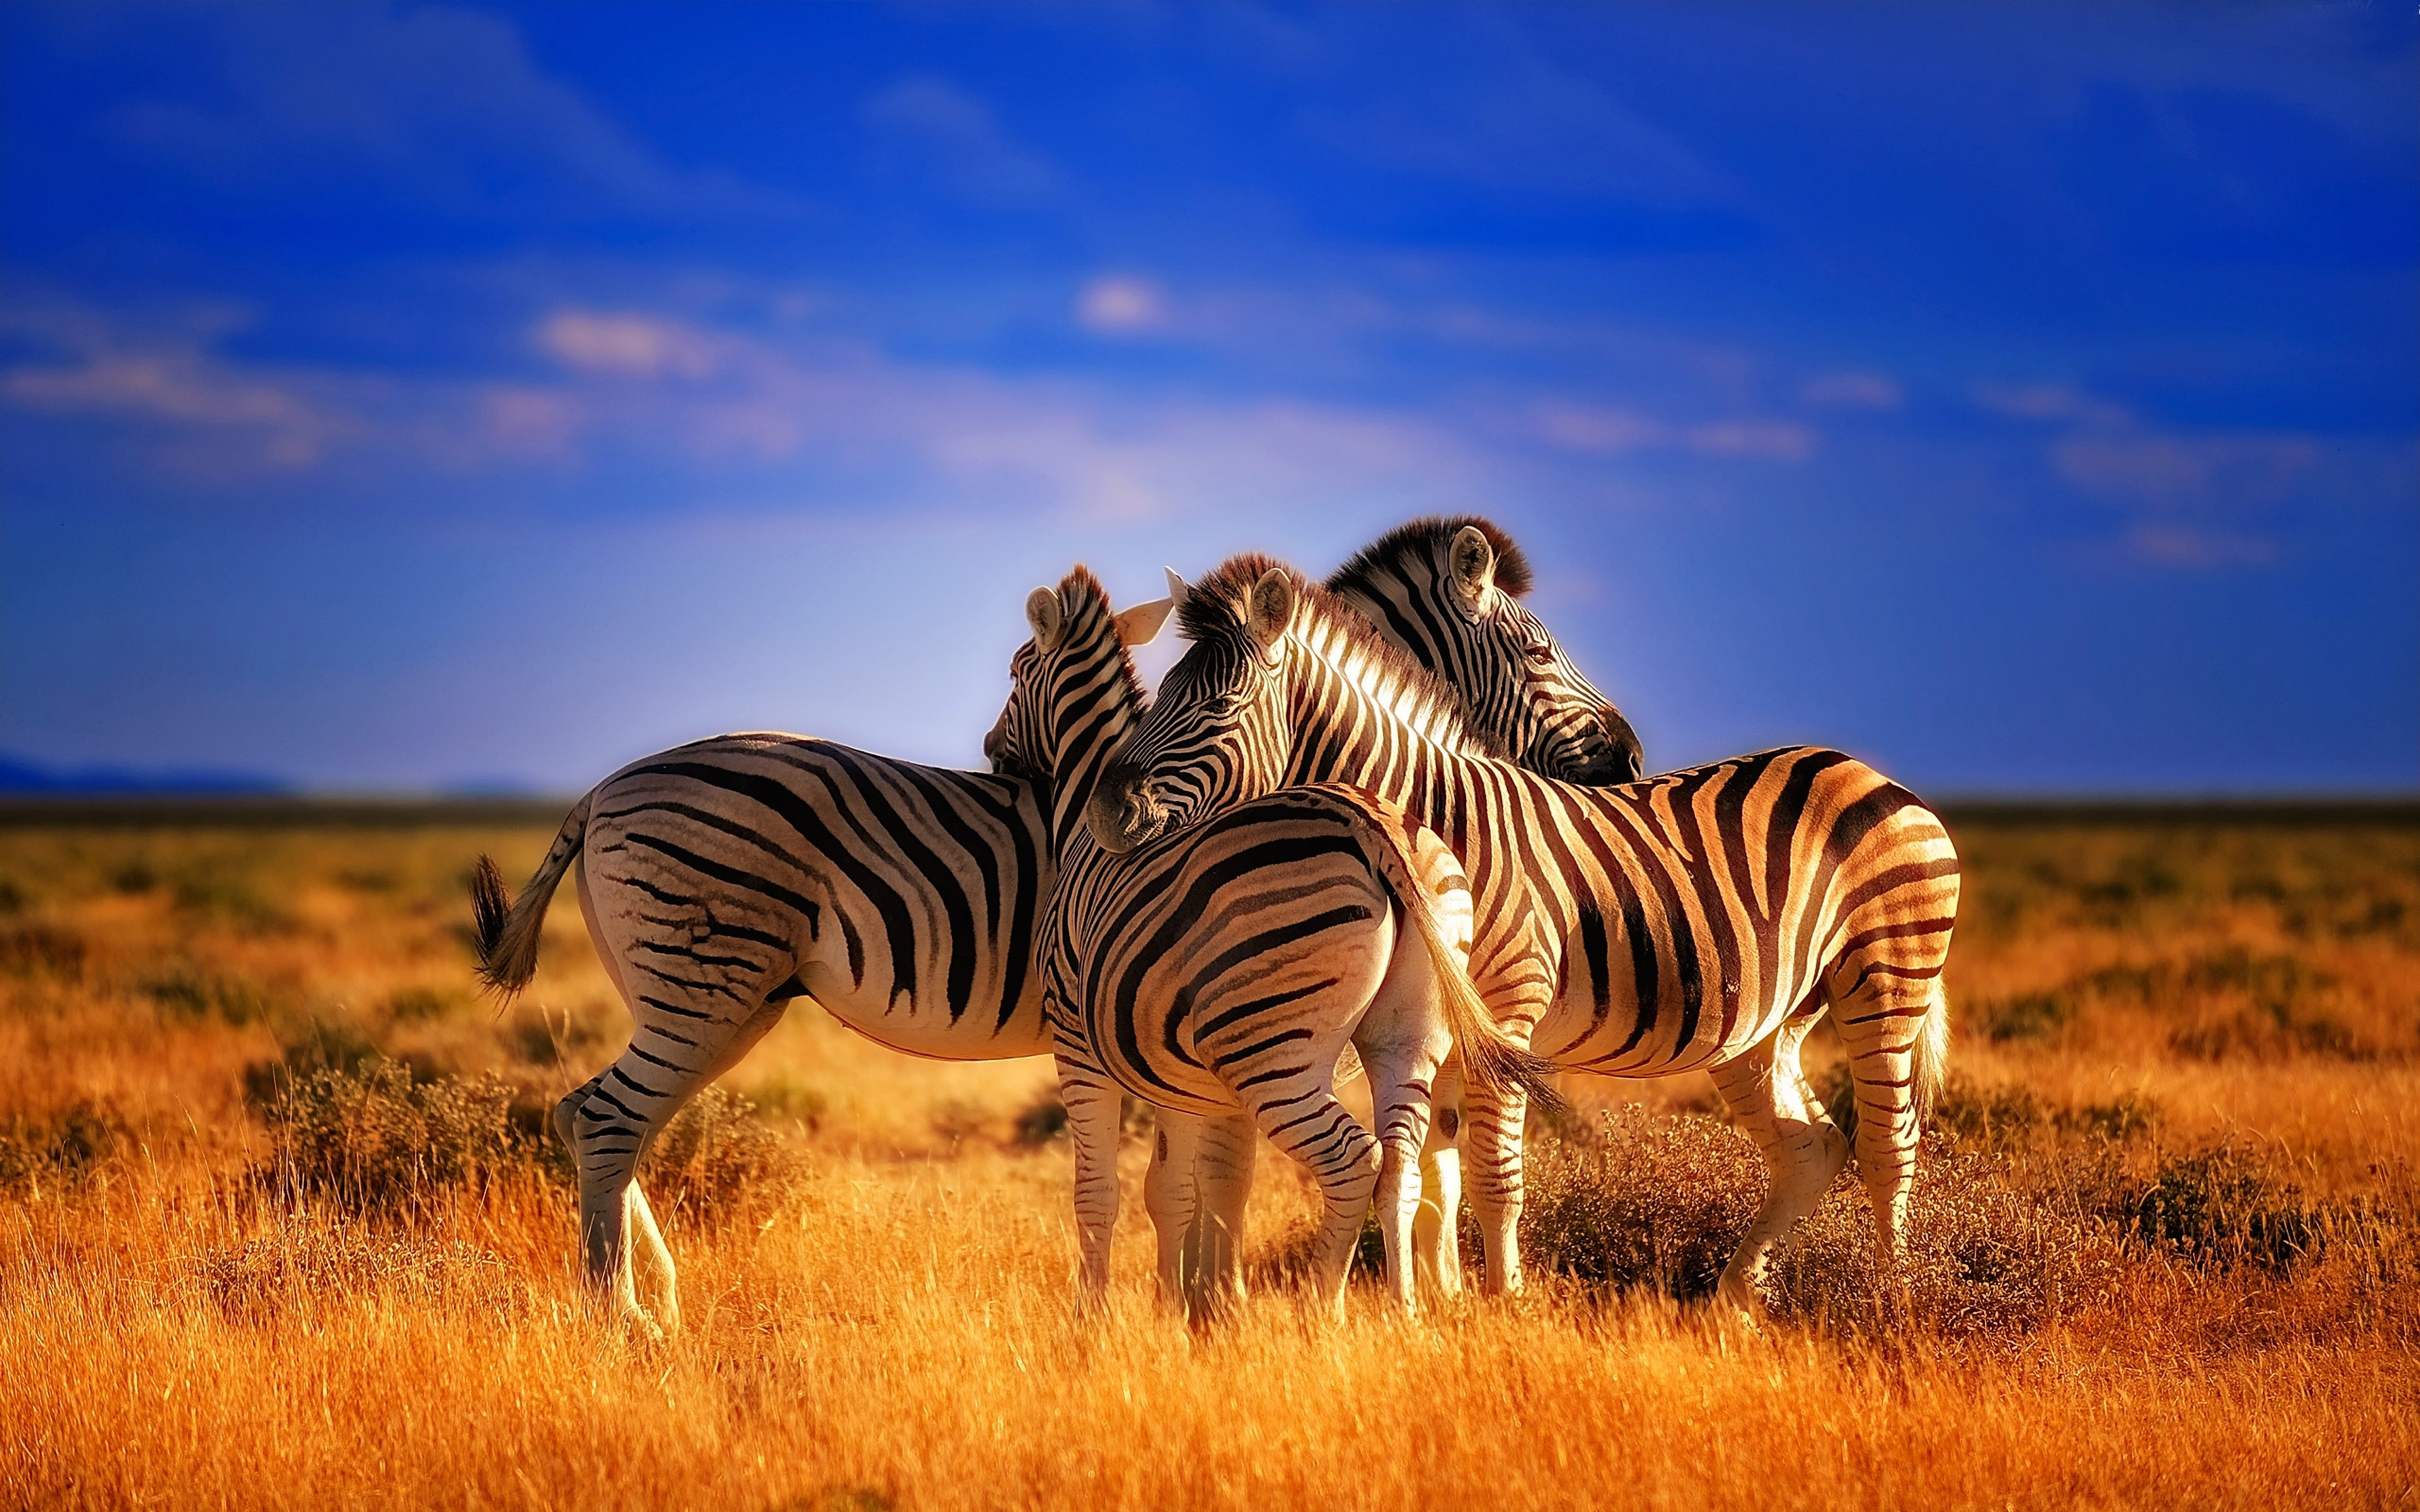 Beautiful Colorful Animals Zebras Hd Wallpaper : Wallpapers13.com